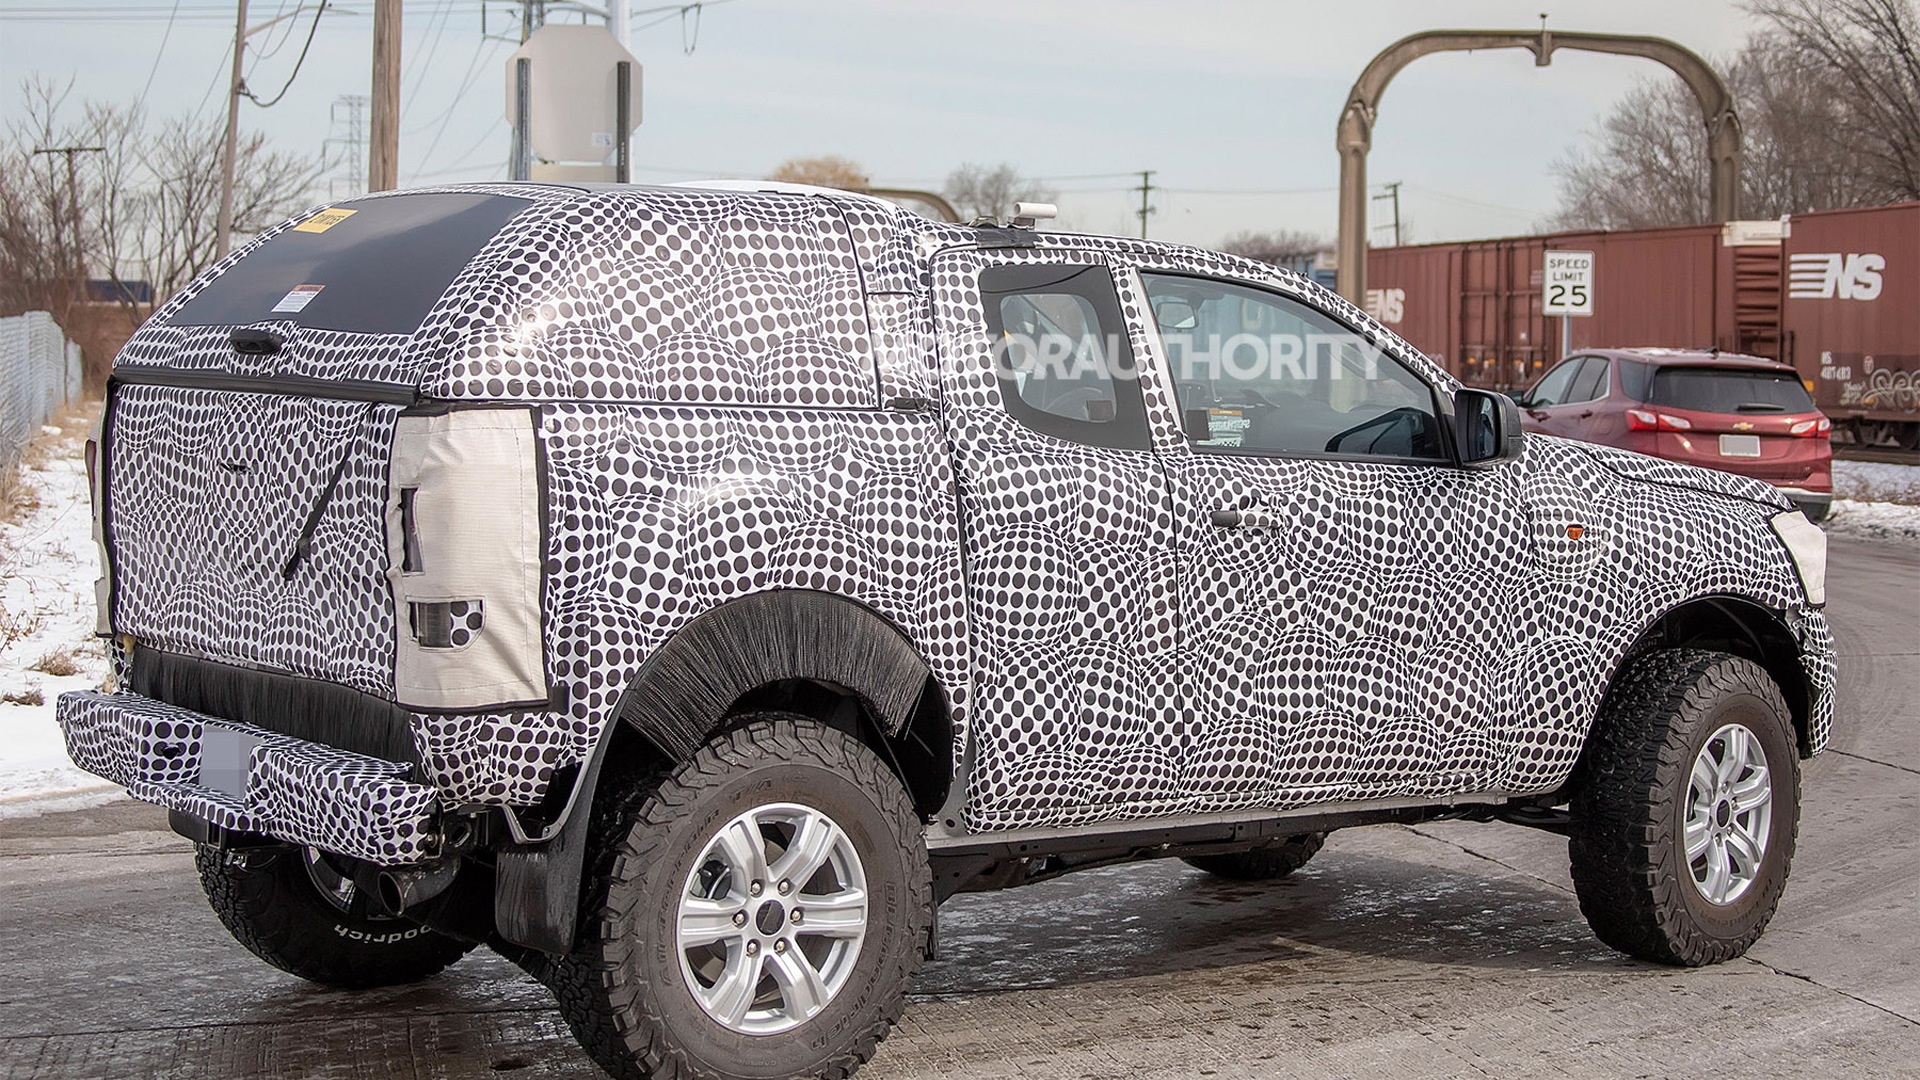 2021 Ford Bronco test mule spy shots - Image via S. Baldauf/SB-Medien